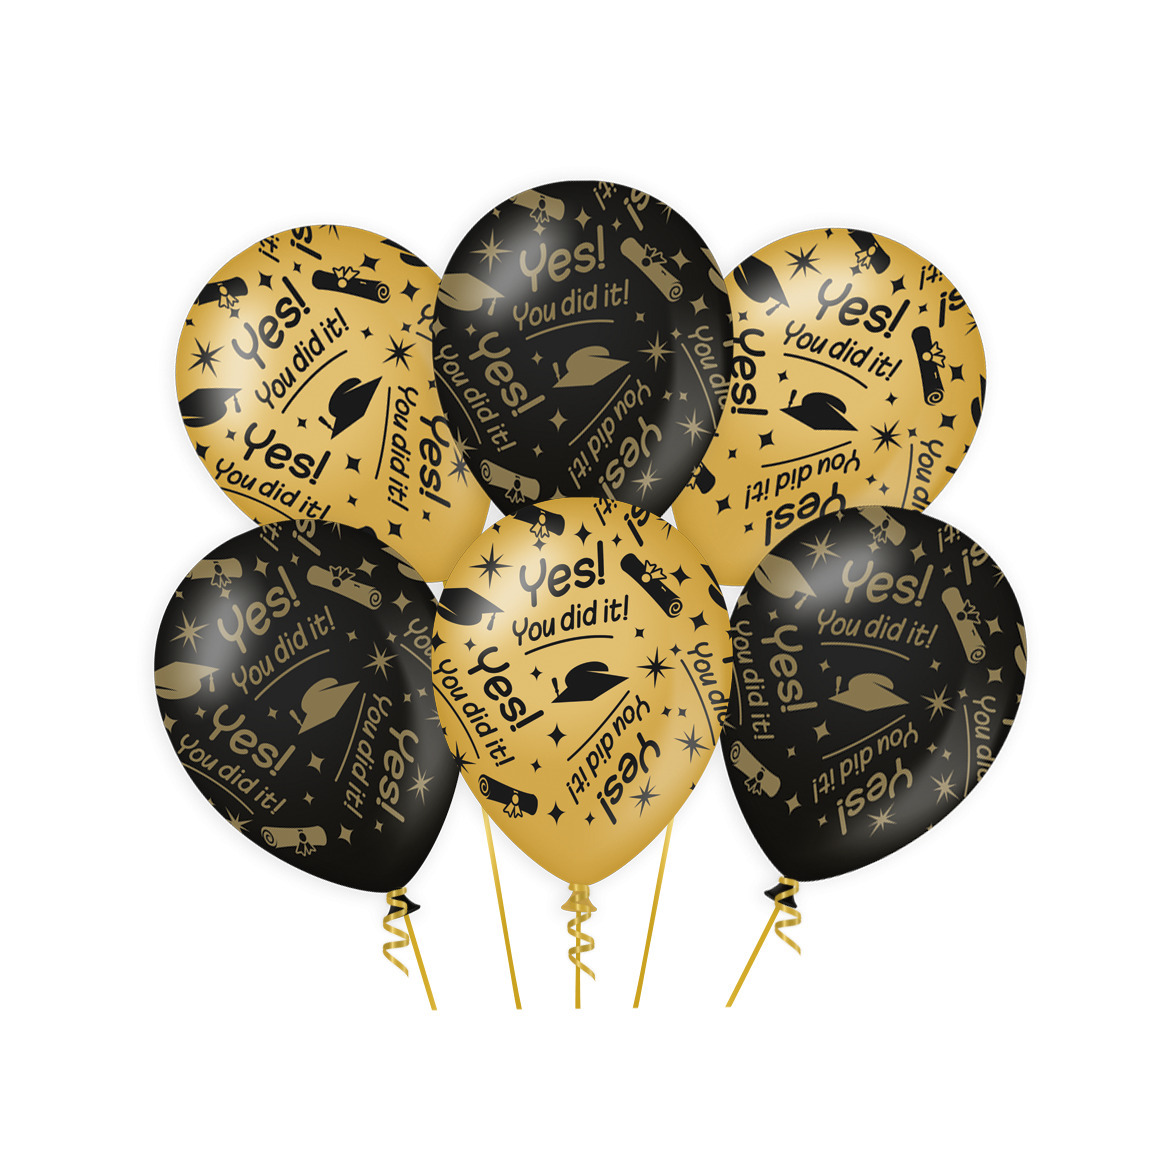 Paperdreams Geslaagd thema party Ballonnen - 6x - zwart/goud - You did it